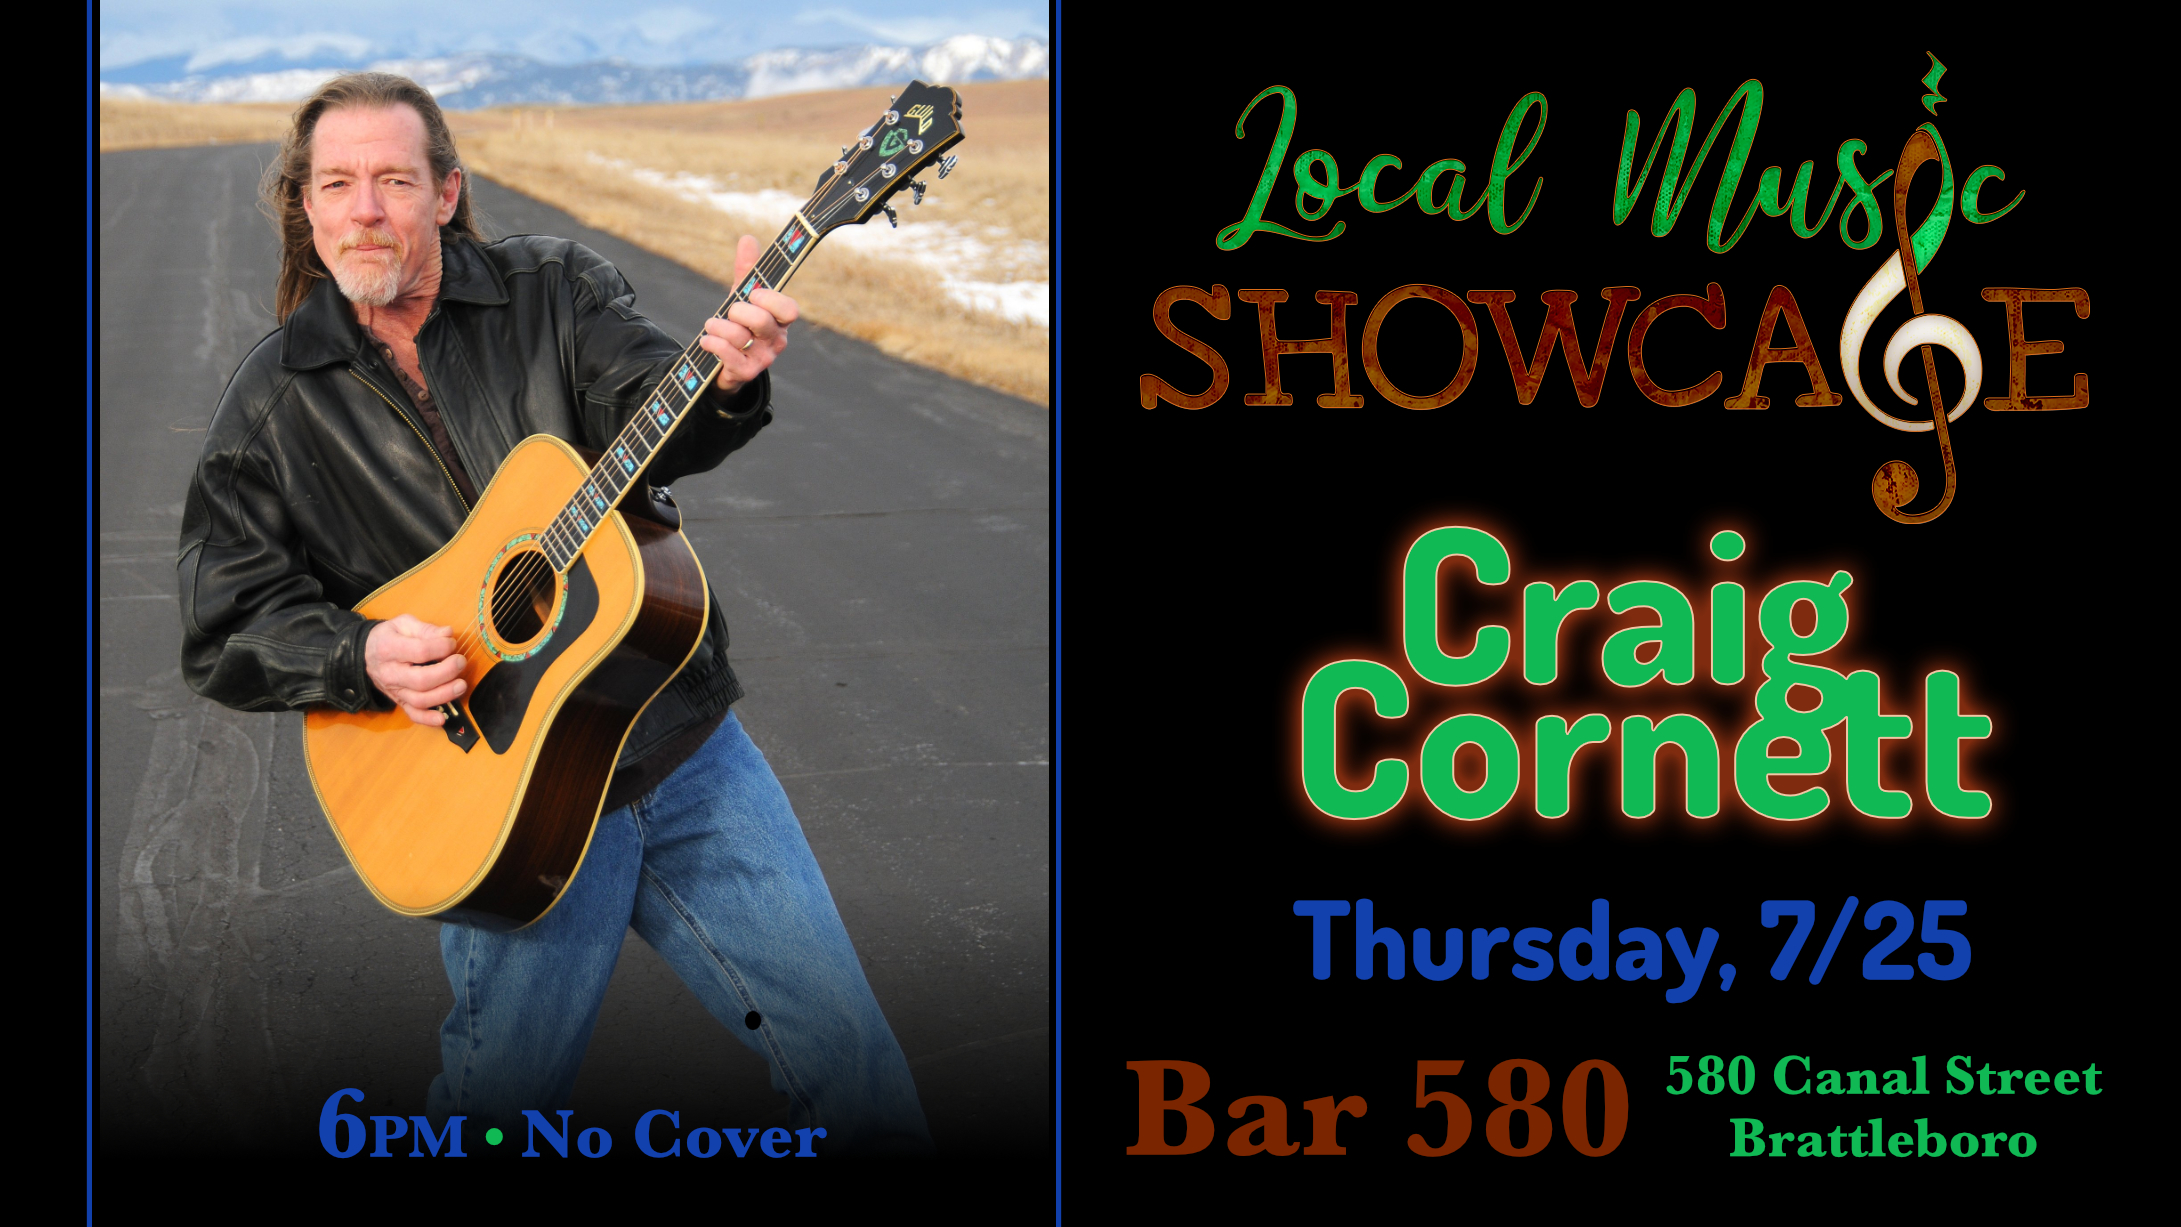 Local Music Showcase, Live Music, Brattleboro, Vermont, Craig Cornett, Donald McCullough, Bar 580